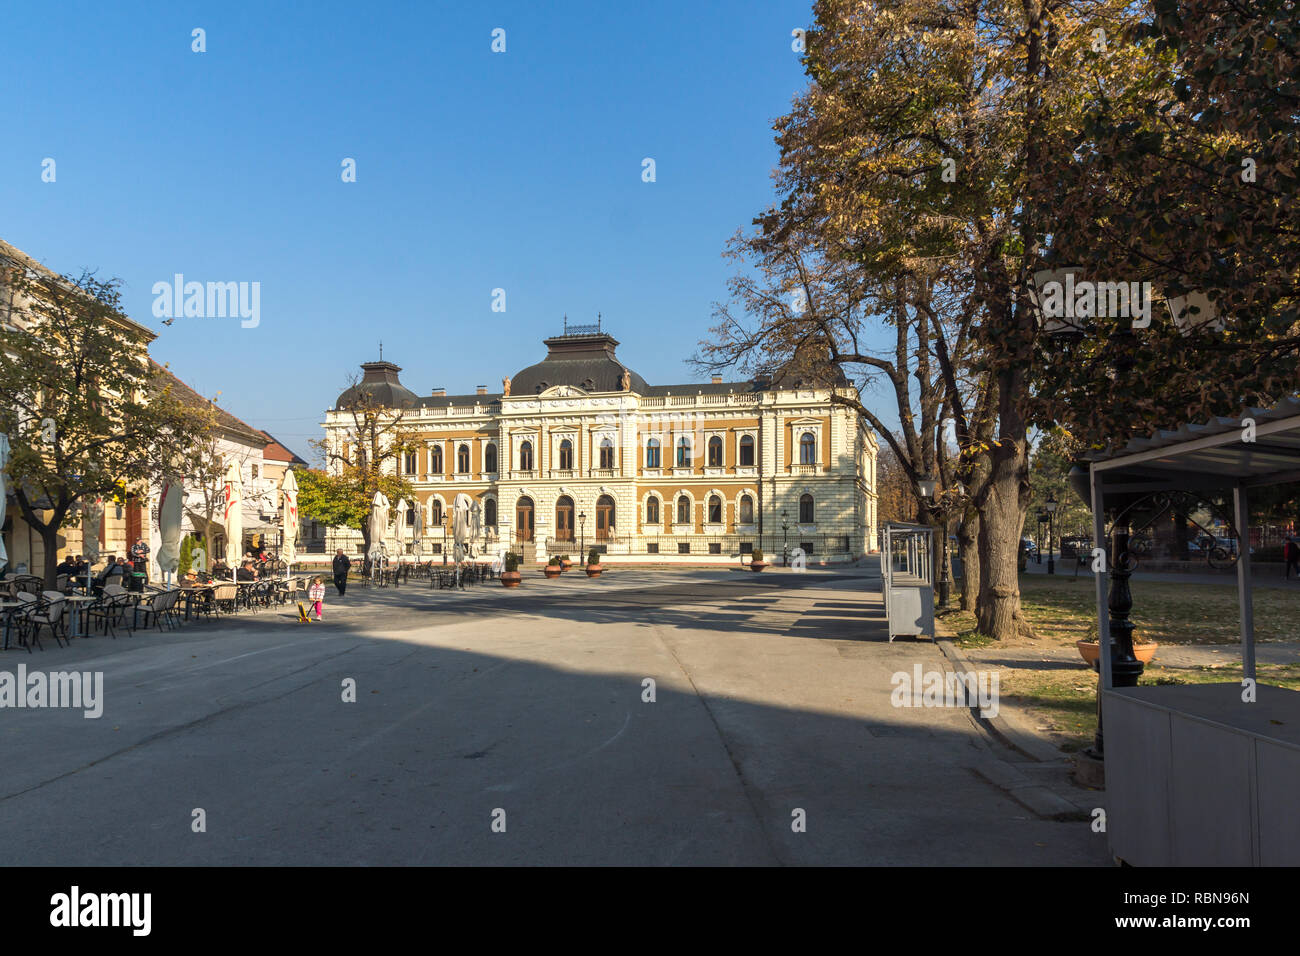 SREMSKI KARLOVCI, VOJVODINA, SERBIA - NOVEMBER 11, 2018: Panorama of center of town of Srijemski Karlovci, Vojvodina, Serbia Stock Photo